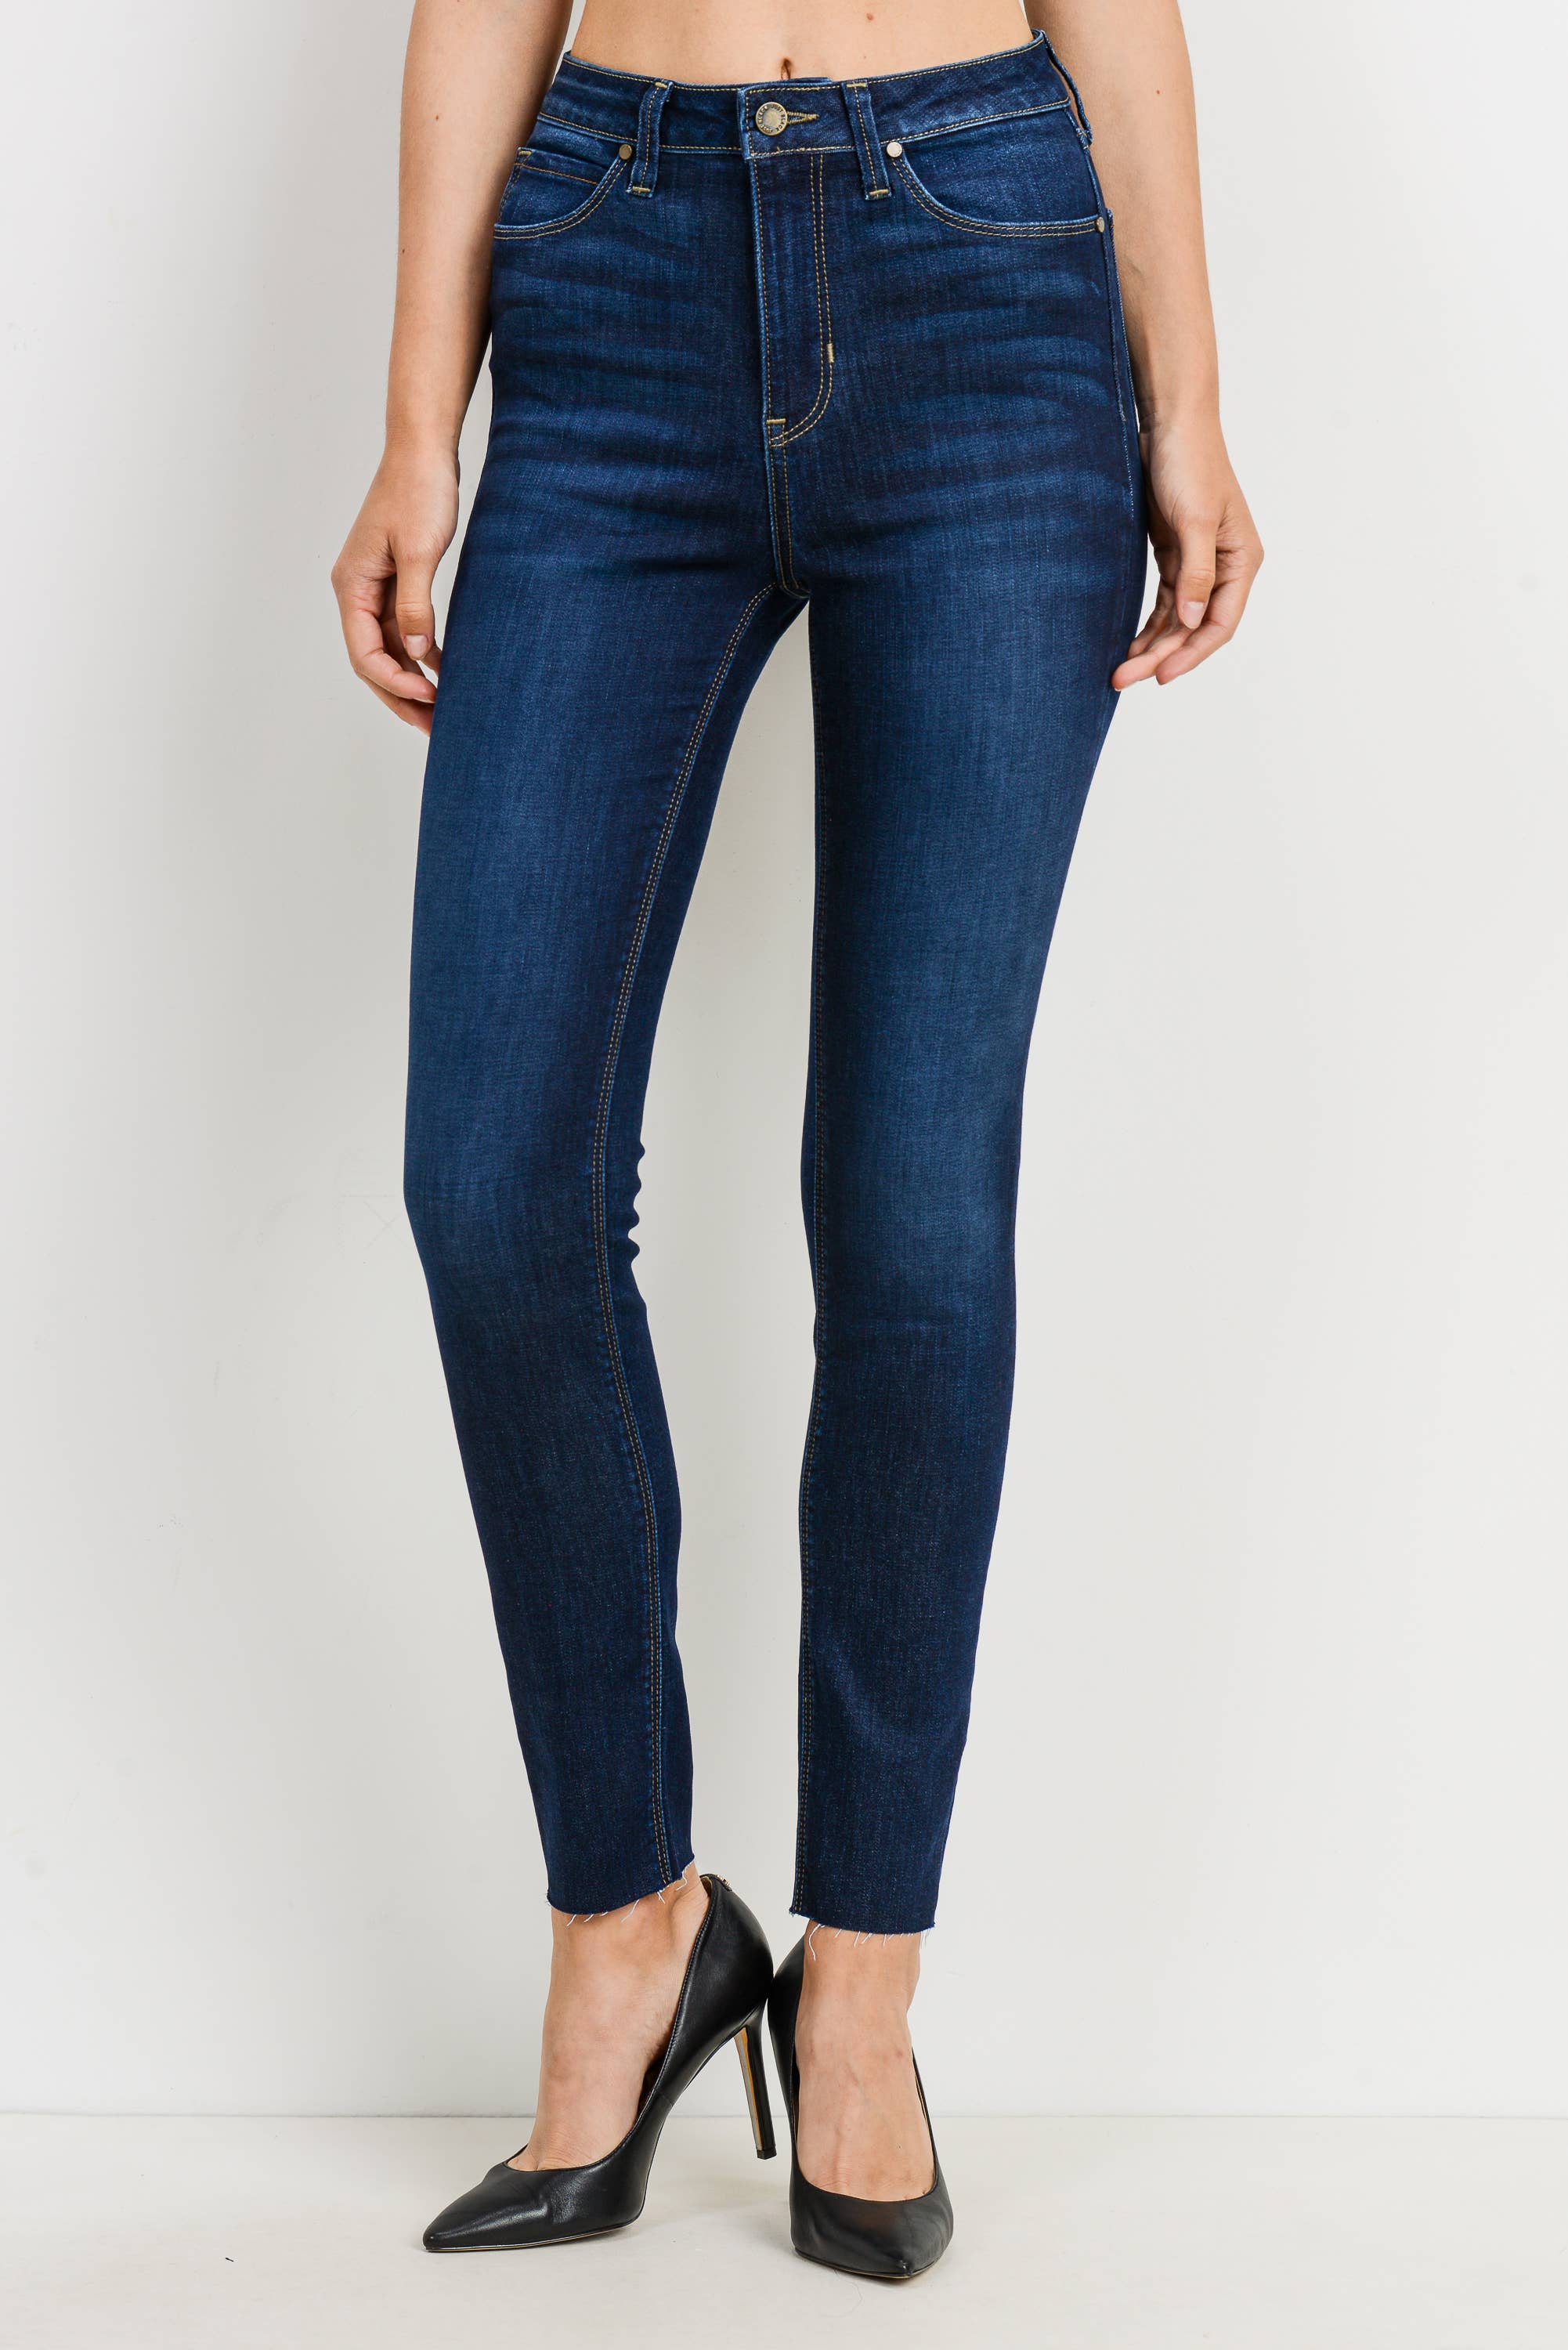 womens jeans wholesale companies